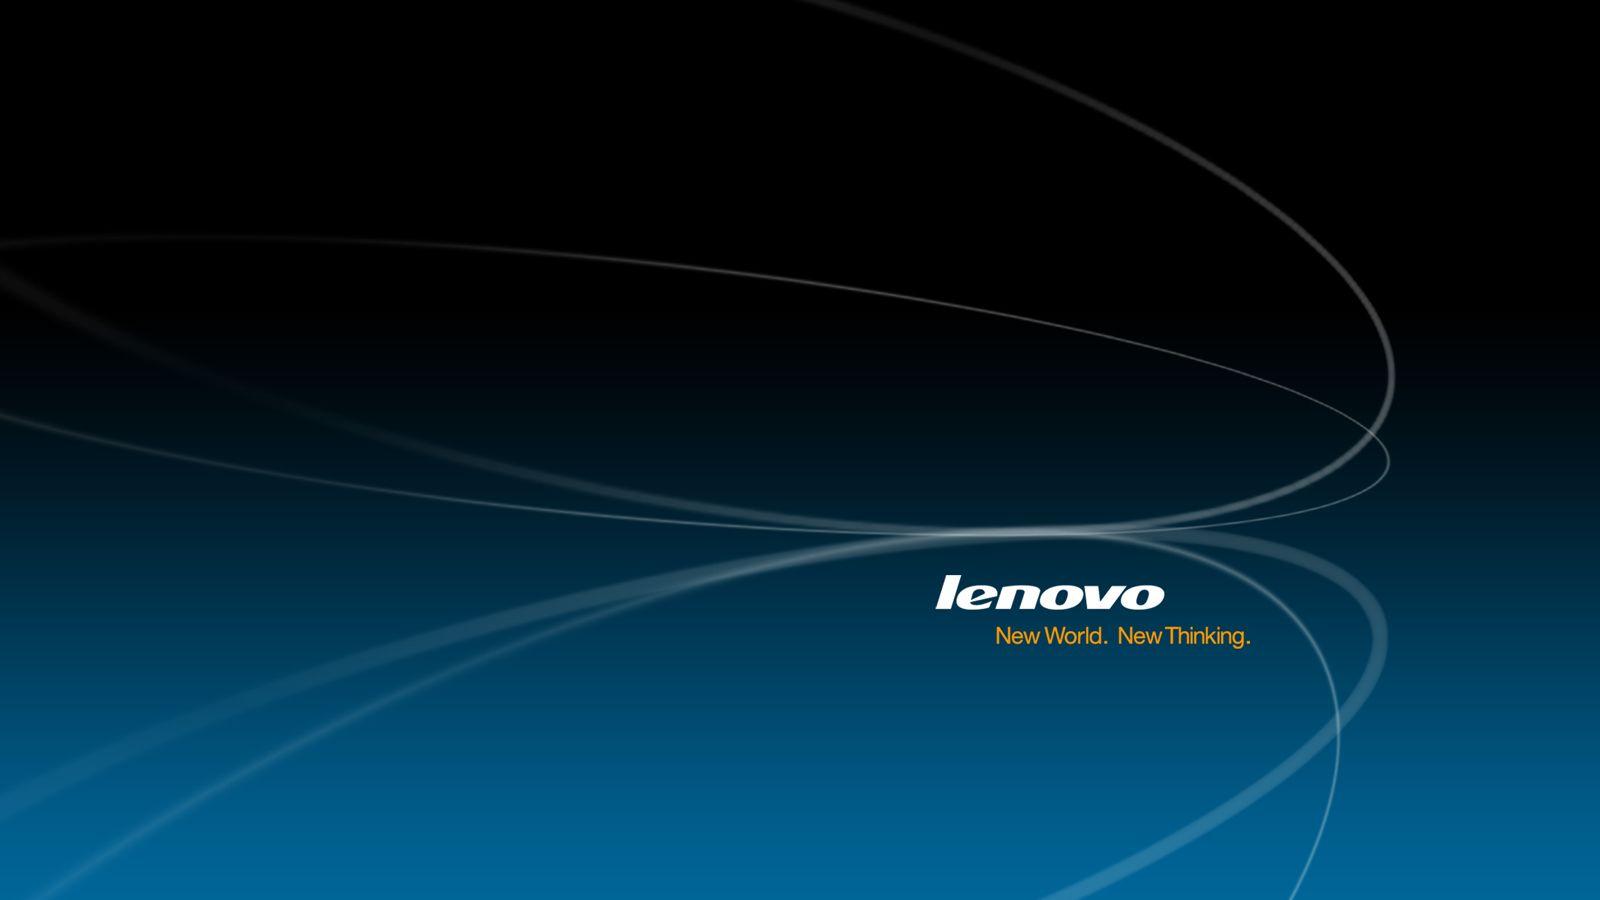 Lenovo Wallpaper 1600x900 HD Wallpaper, Background Image